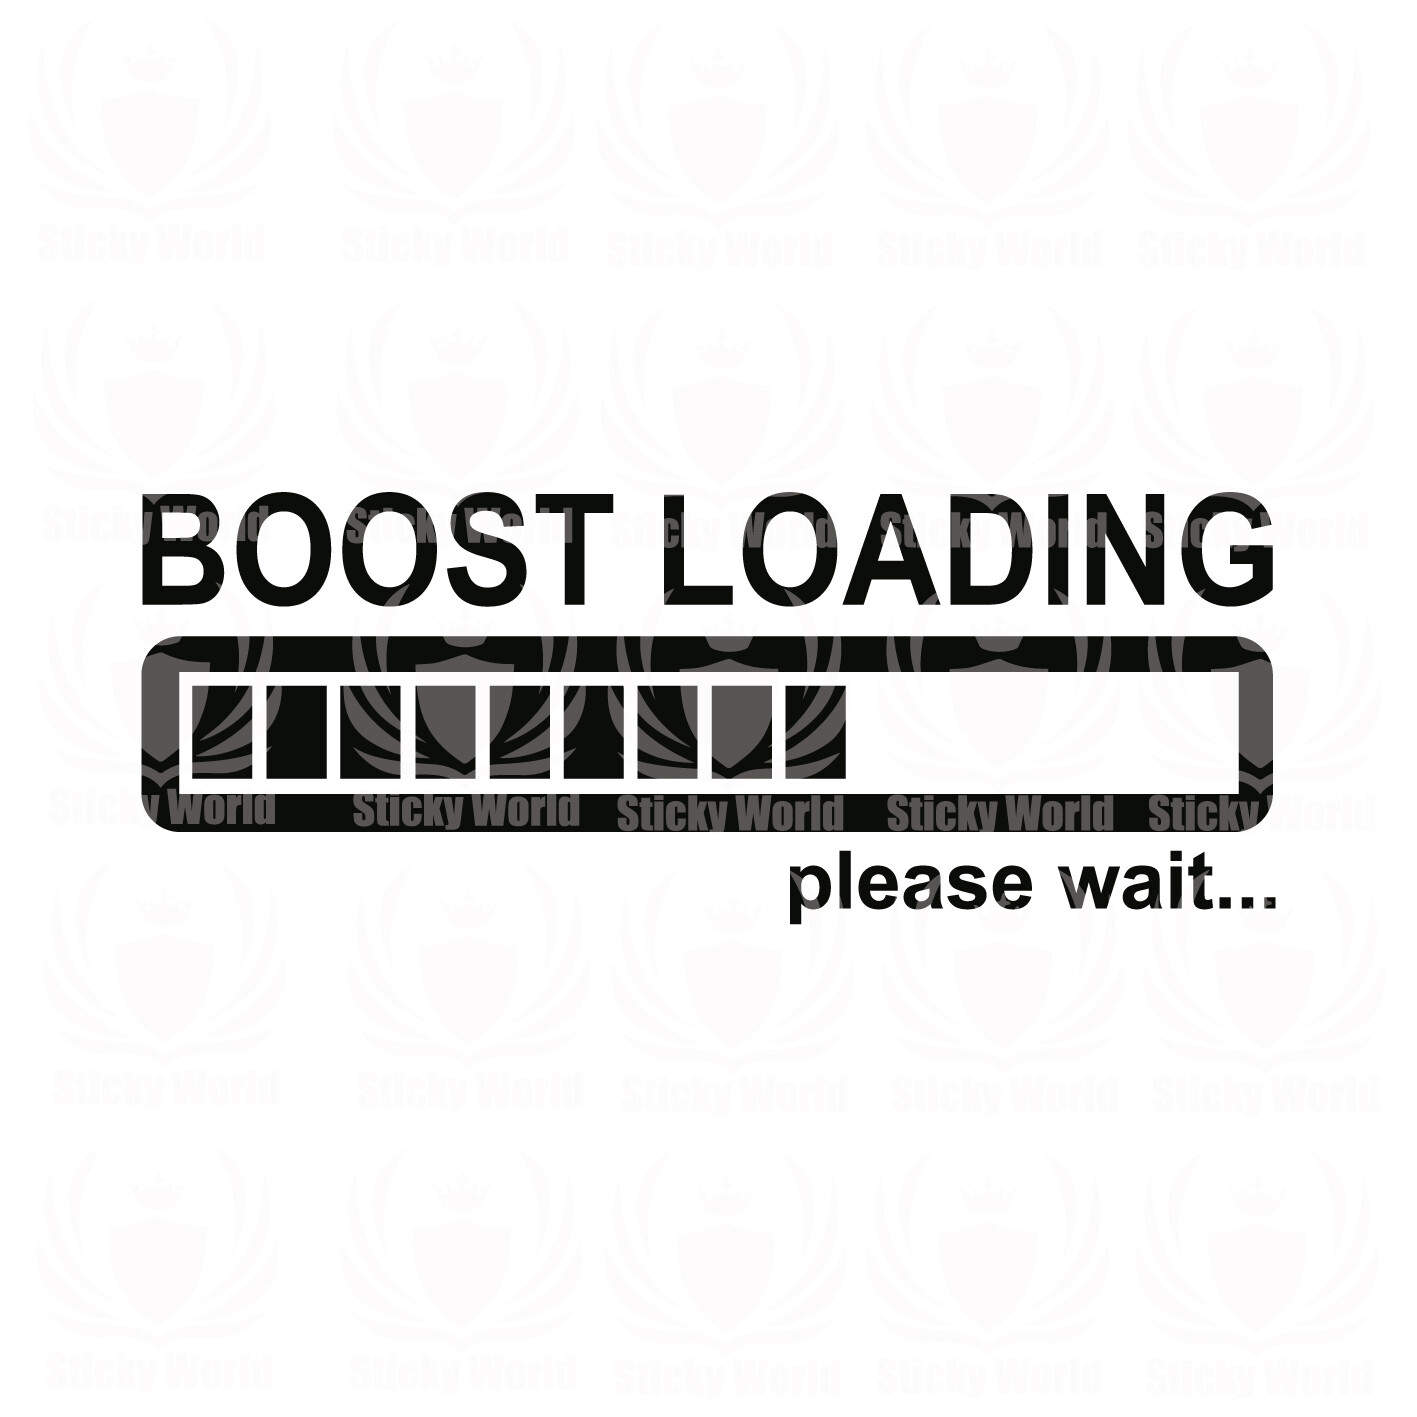 Boost Loading